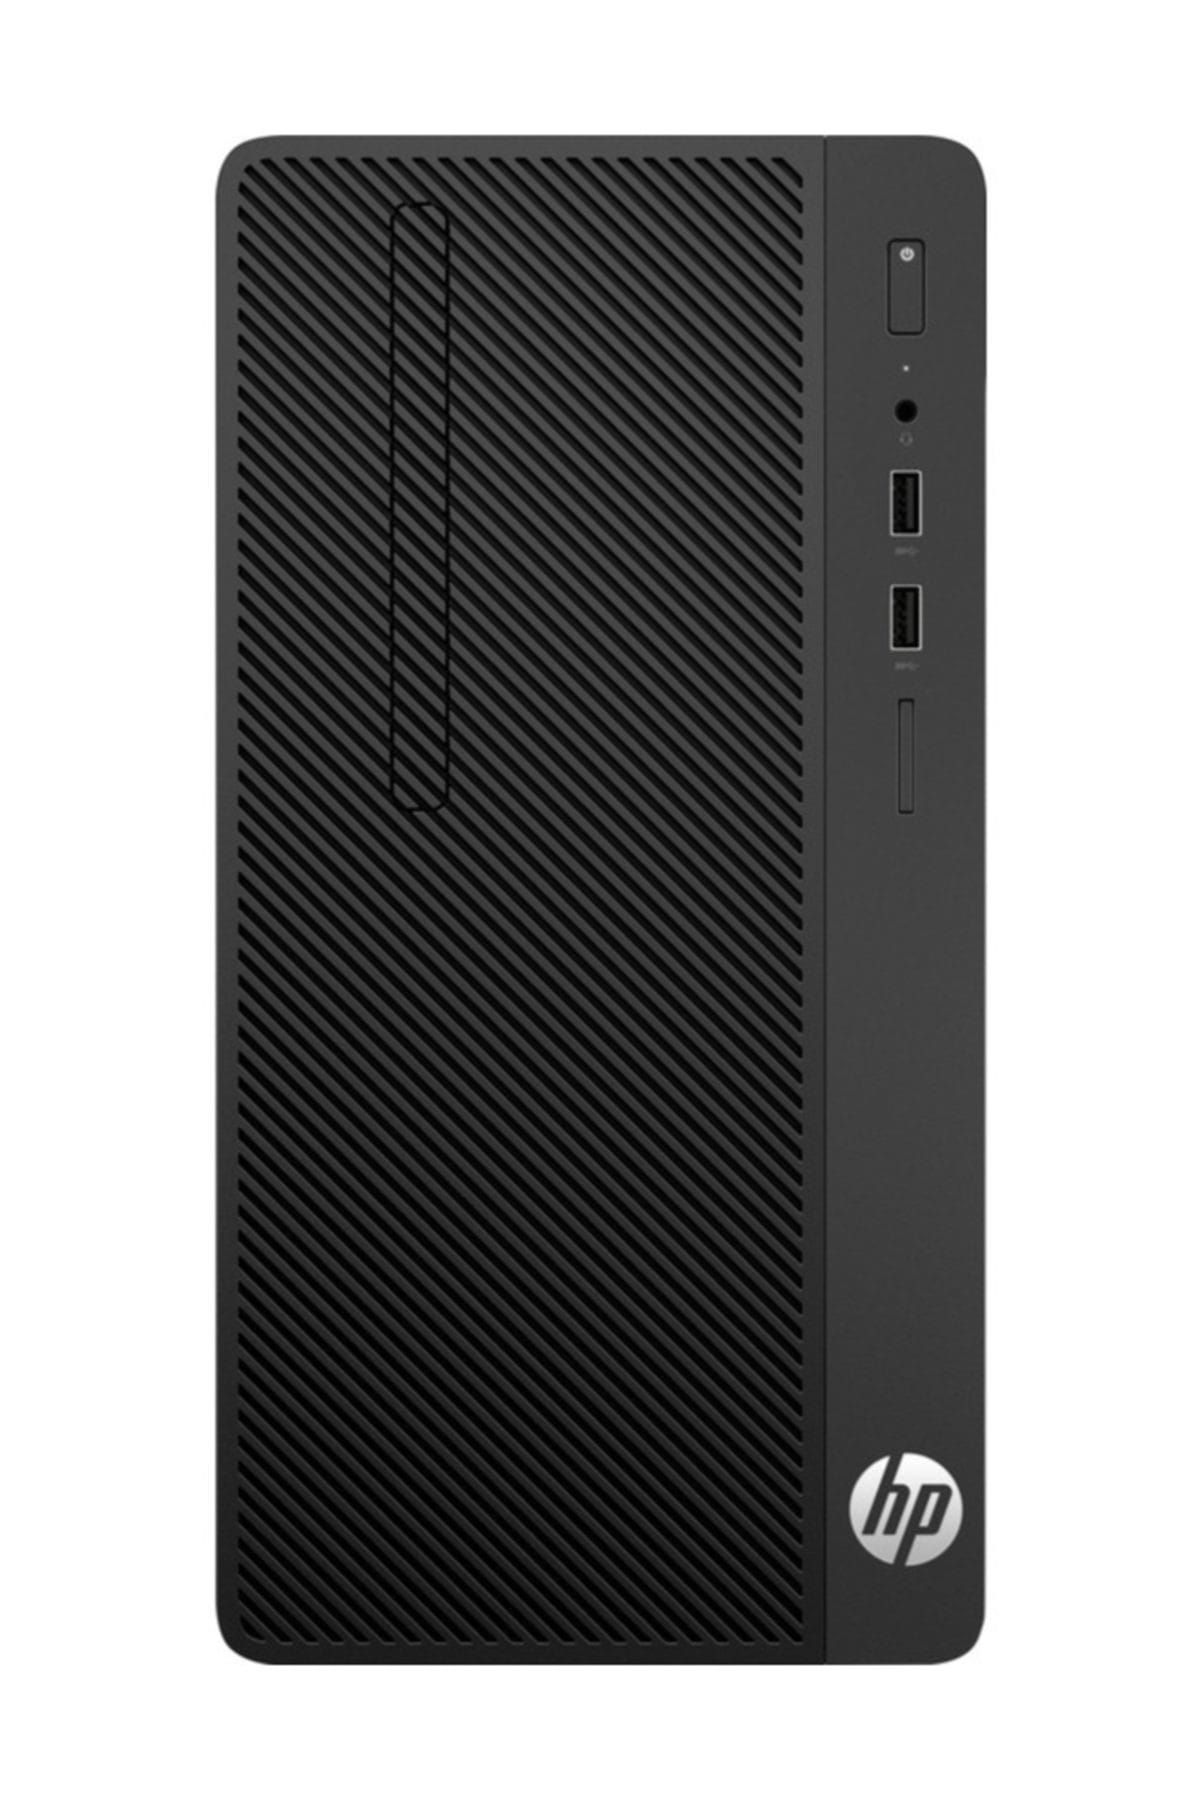 HP 280MT 4CZ69EA i3-7100 4BG 1TB FreeDOS